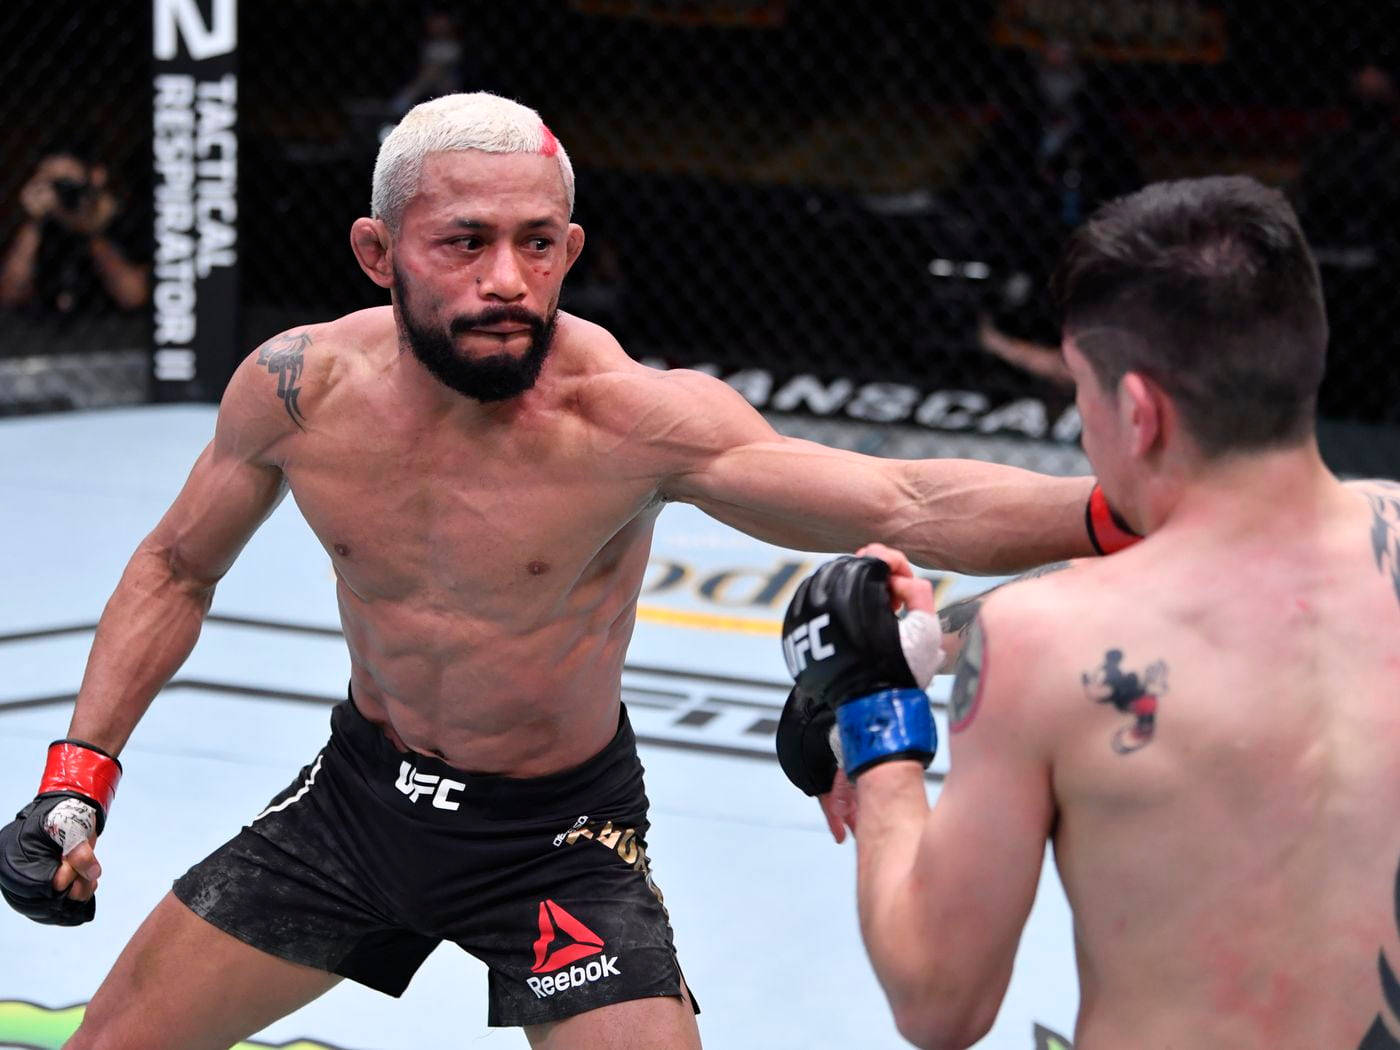 Brandon Moreno deflecting a hit from Deiveson Figueiredo in an intense UFC match. Wallpaper